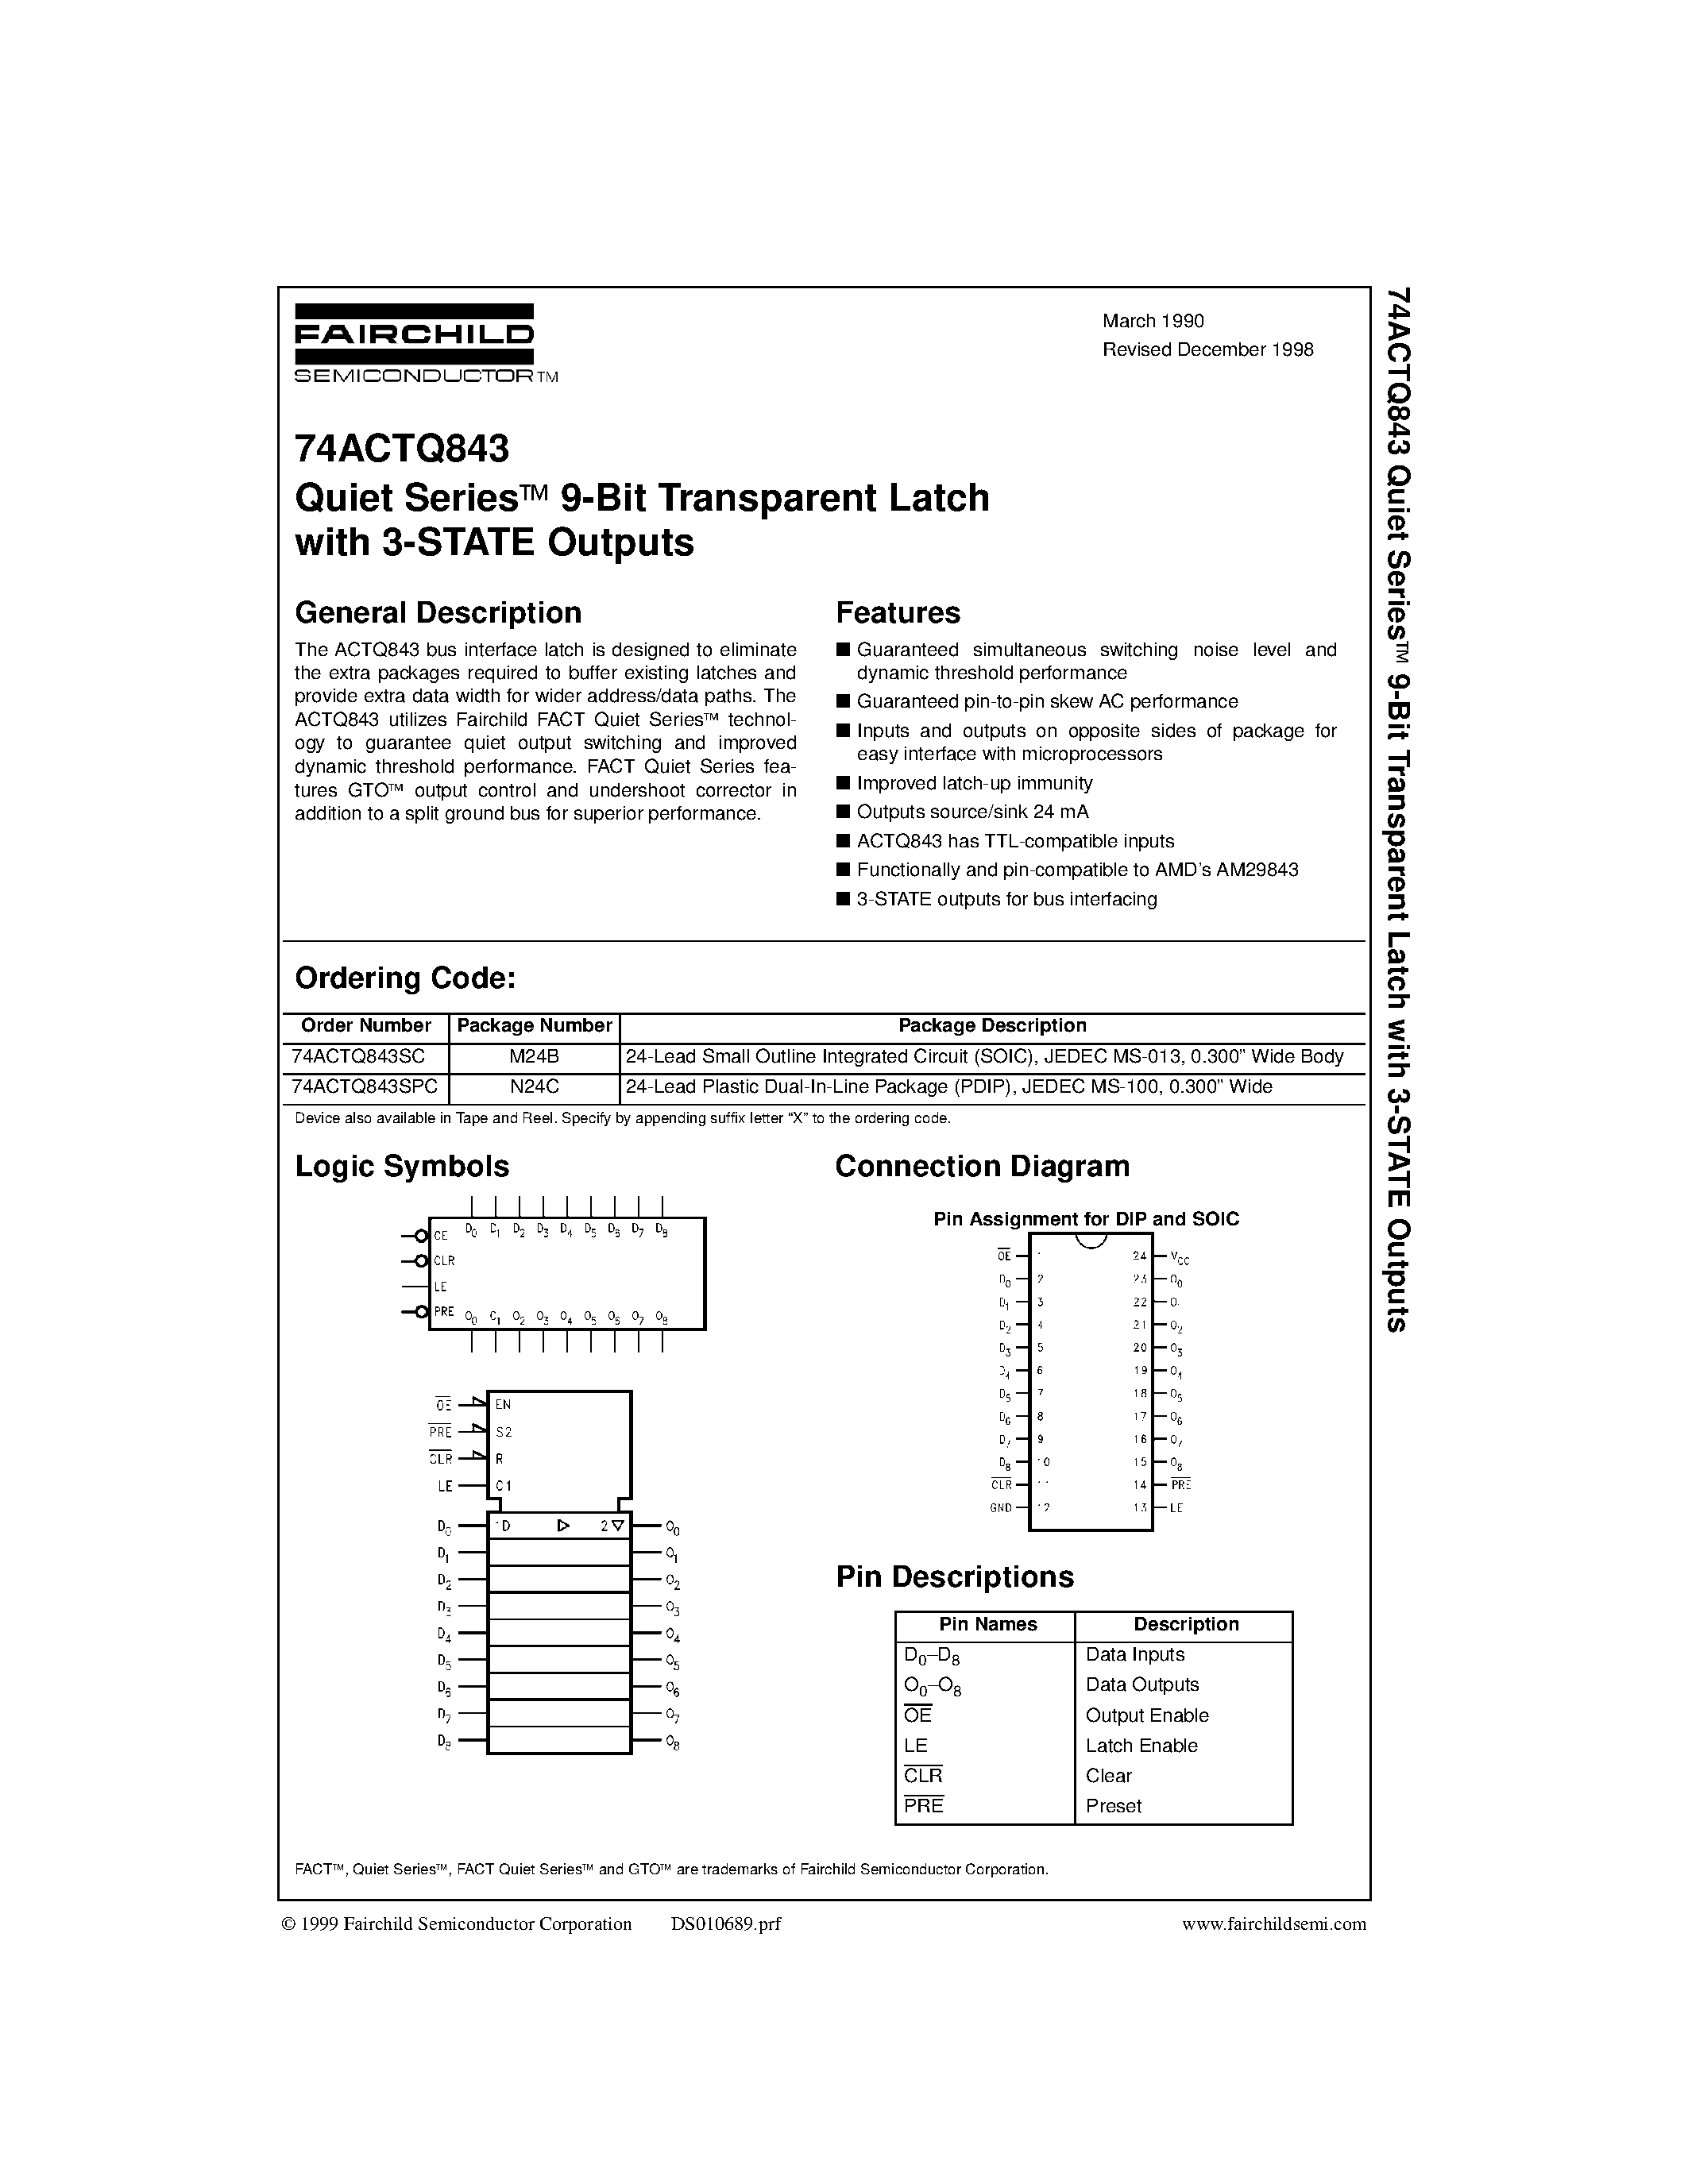 Даташит 74ACTQ843SPC - Quiet Seriesa 9-Bit Transparent Latch with 3-STATE Outputs страница 1